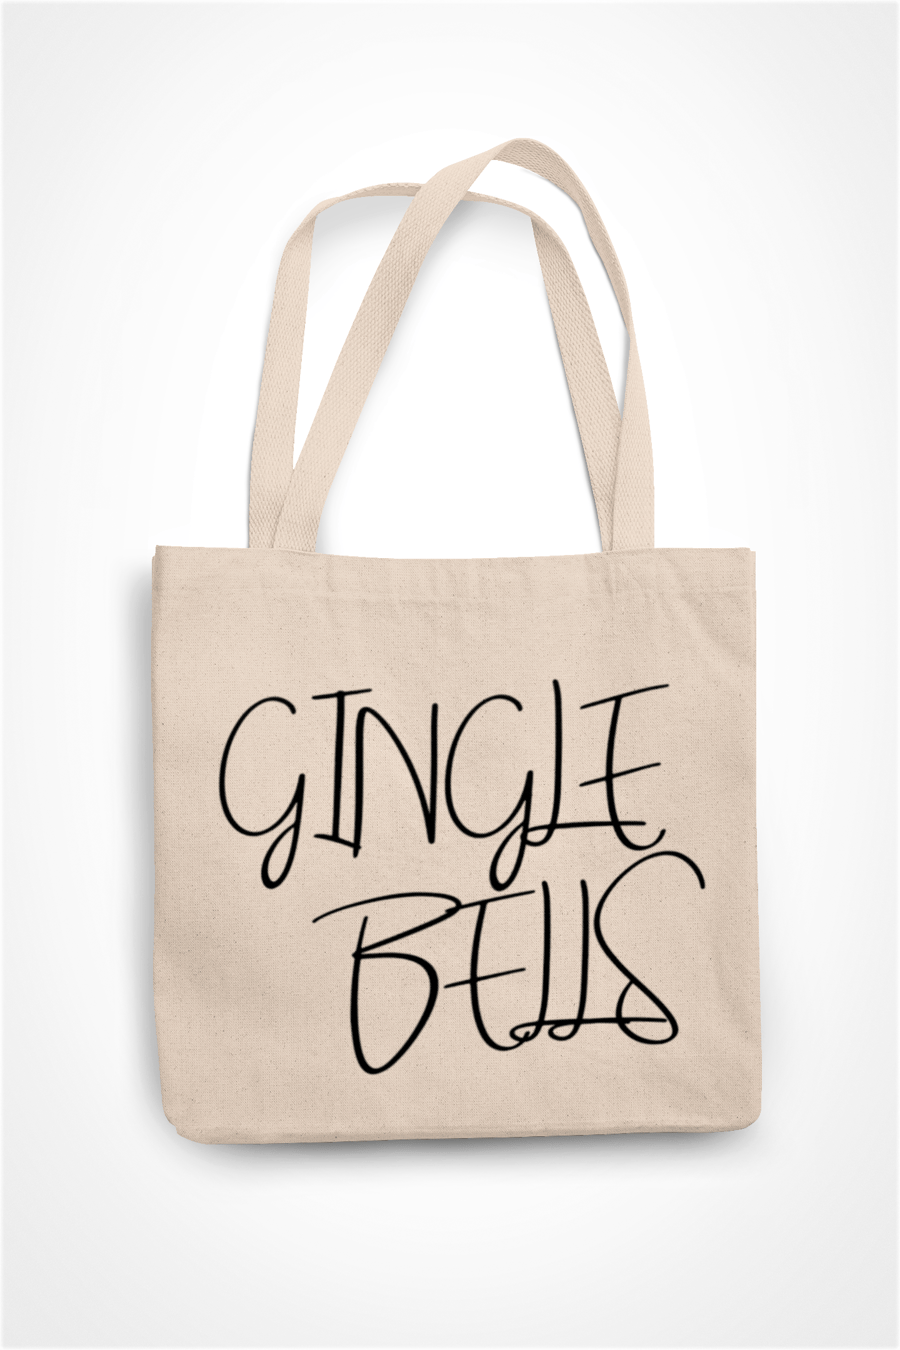 GINgel Bells Funny Christmas Tote Bag - Shopper Bag Gin Themed